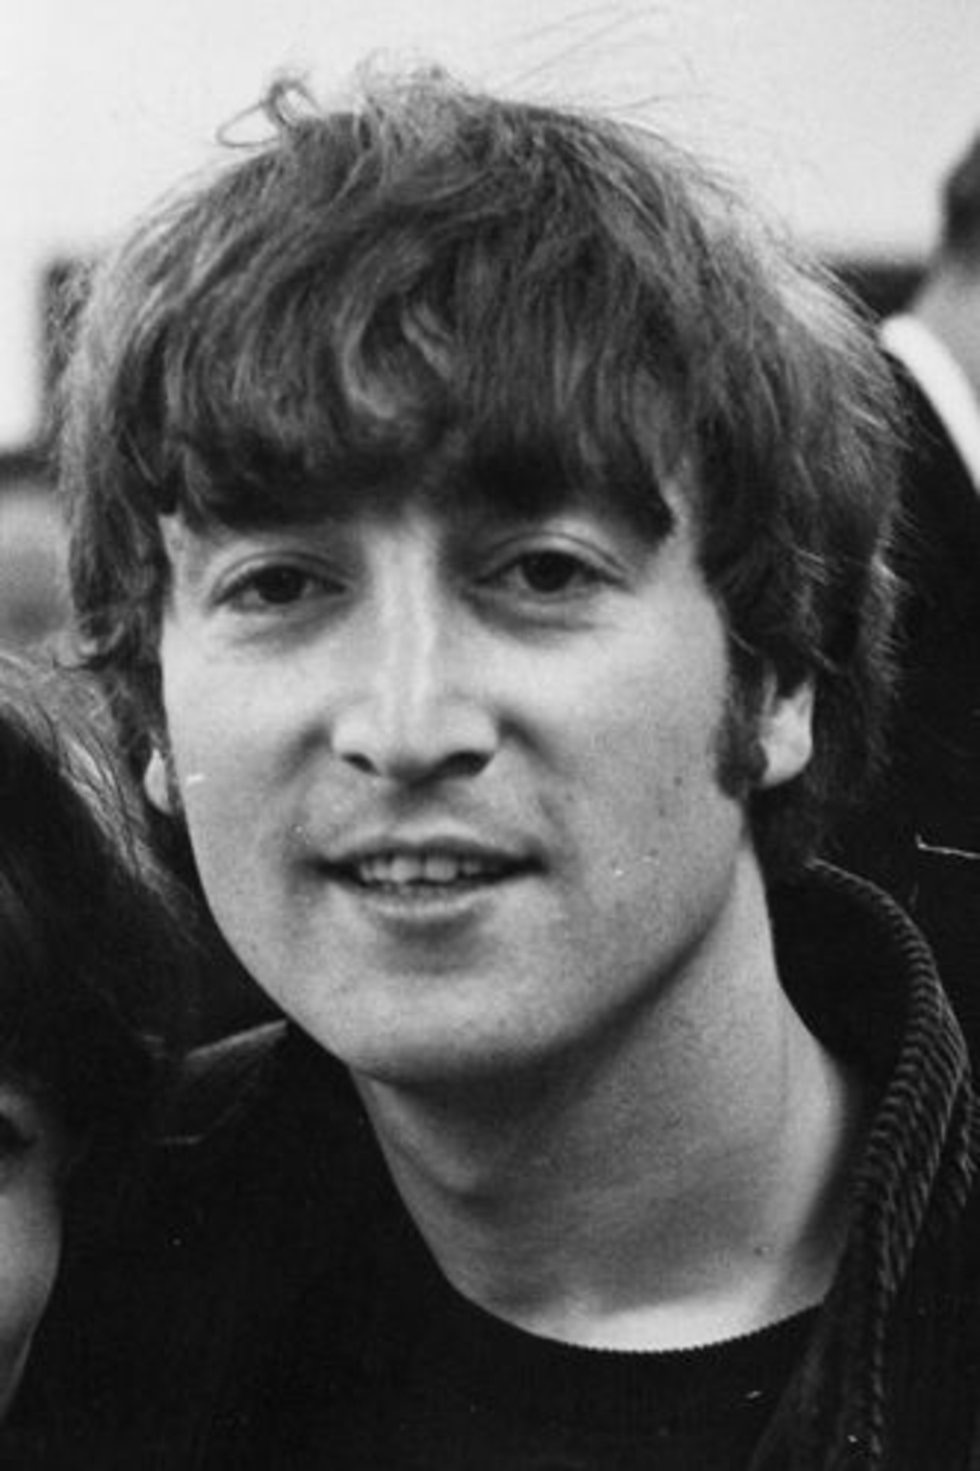 Rip John Lennon ジョン レノンの死 ザ ビートルズとその周辺